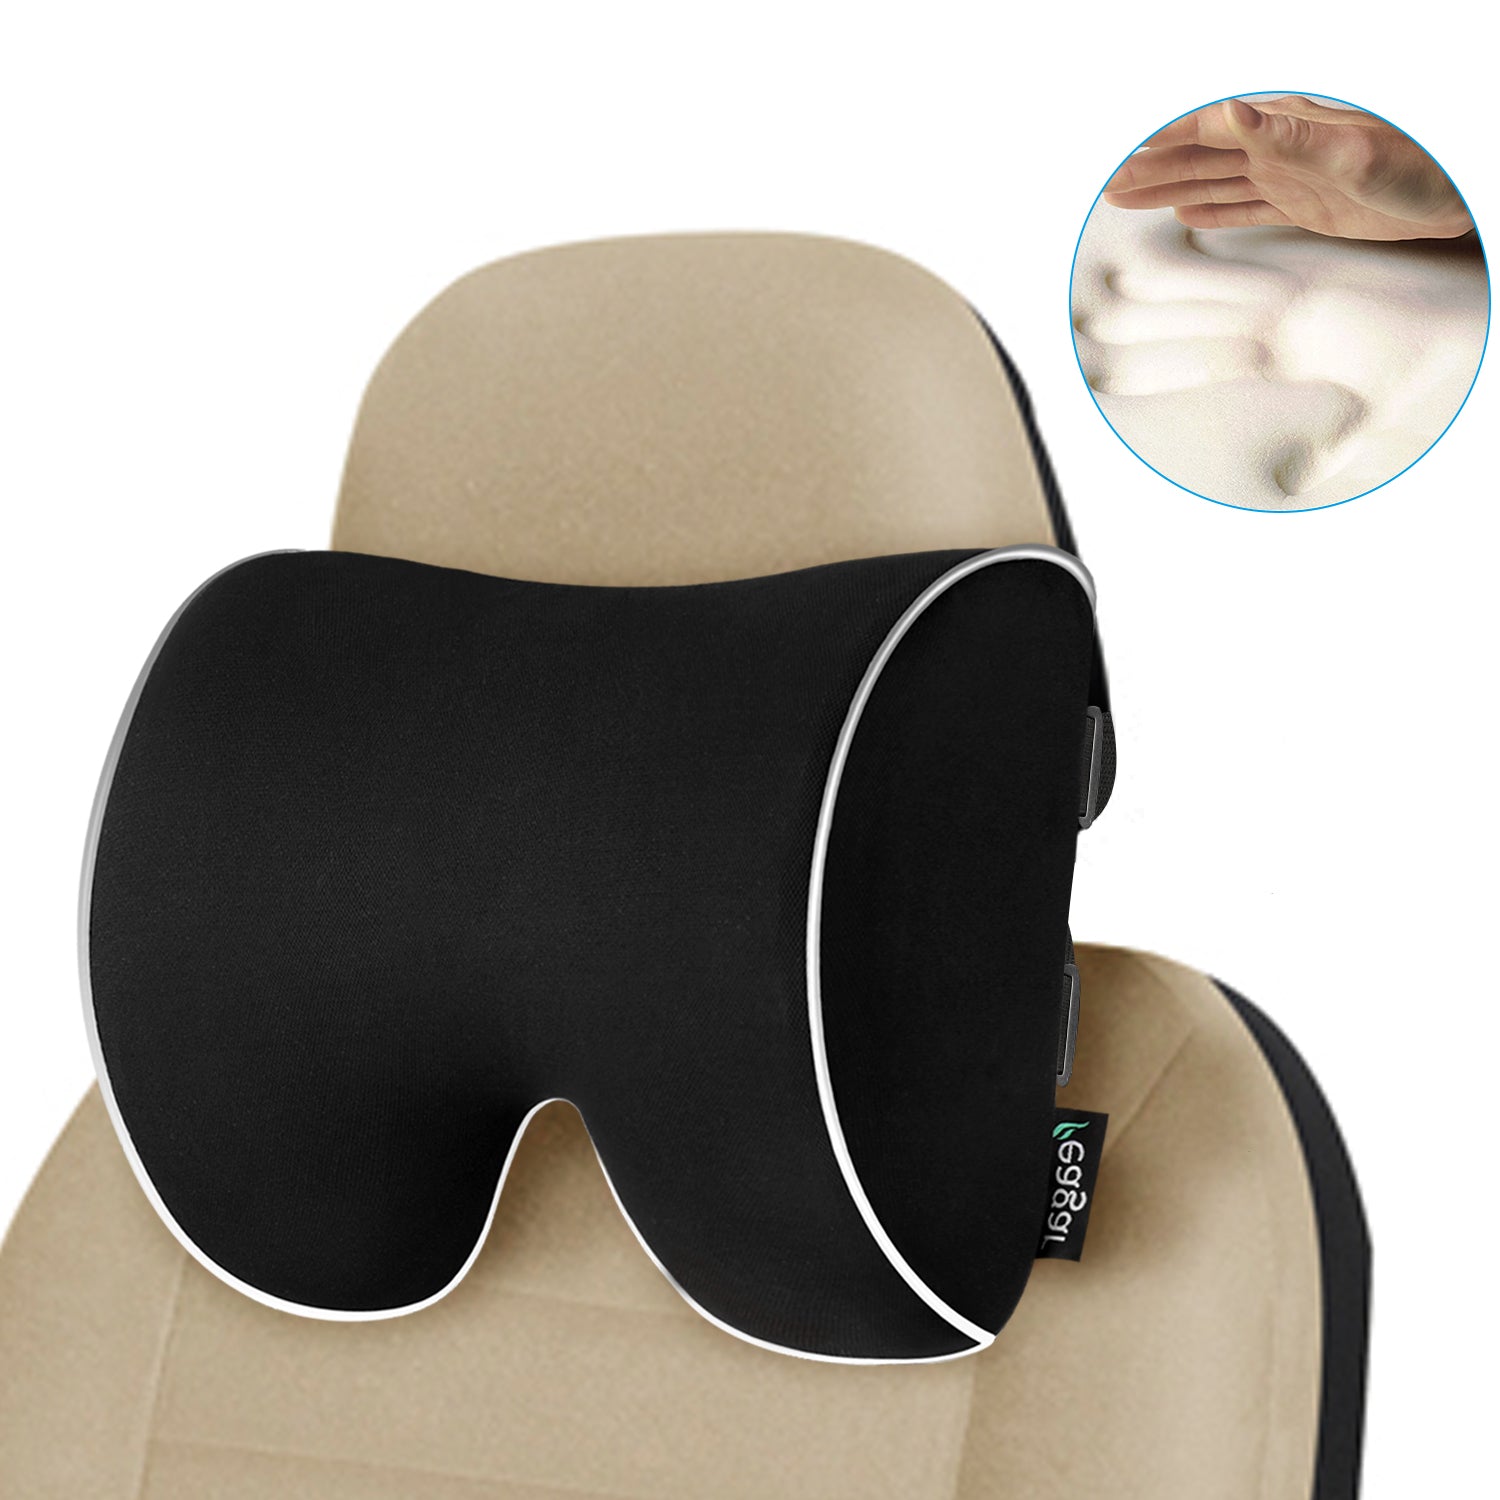 https://www.momjunction.com/wp-content/uploads/product-images/feagar-car-seat-neck-pillow_afl417.jpg